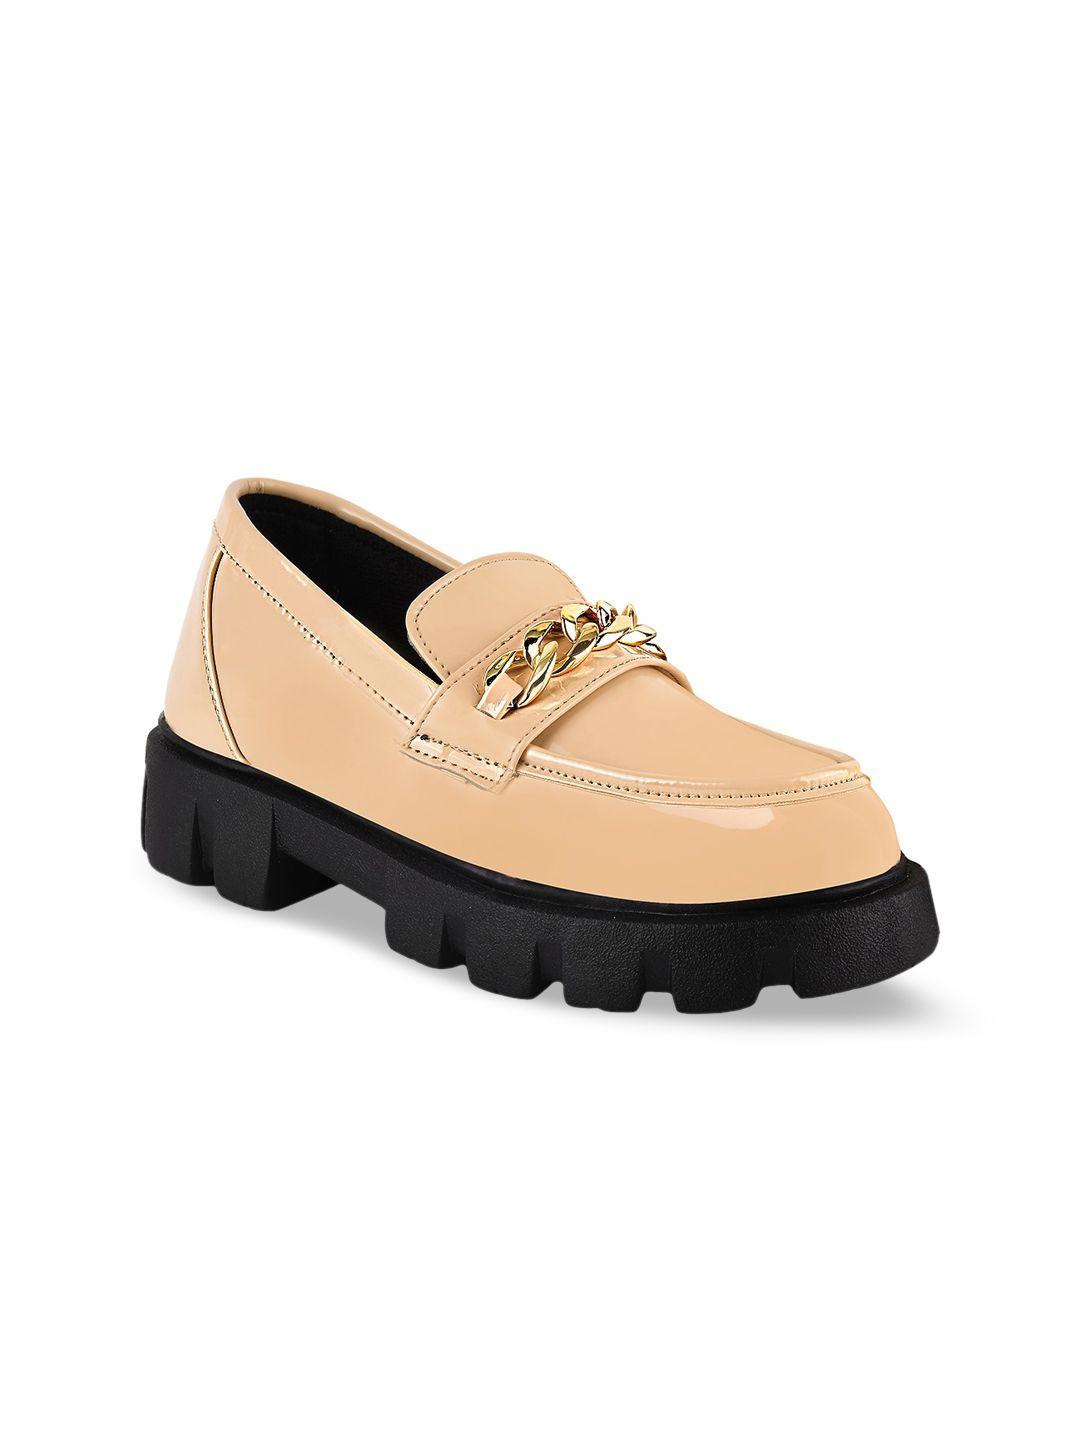 shoetopia-women-embellished-patent-leather-horsebit-loafers